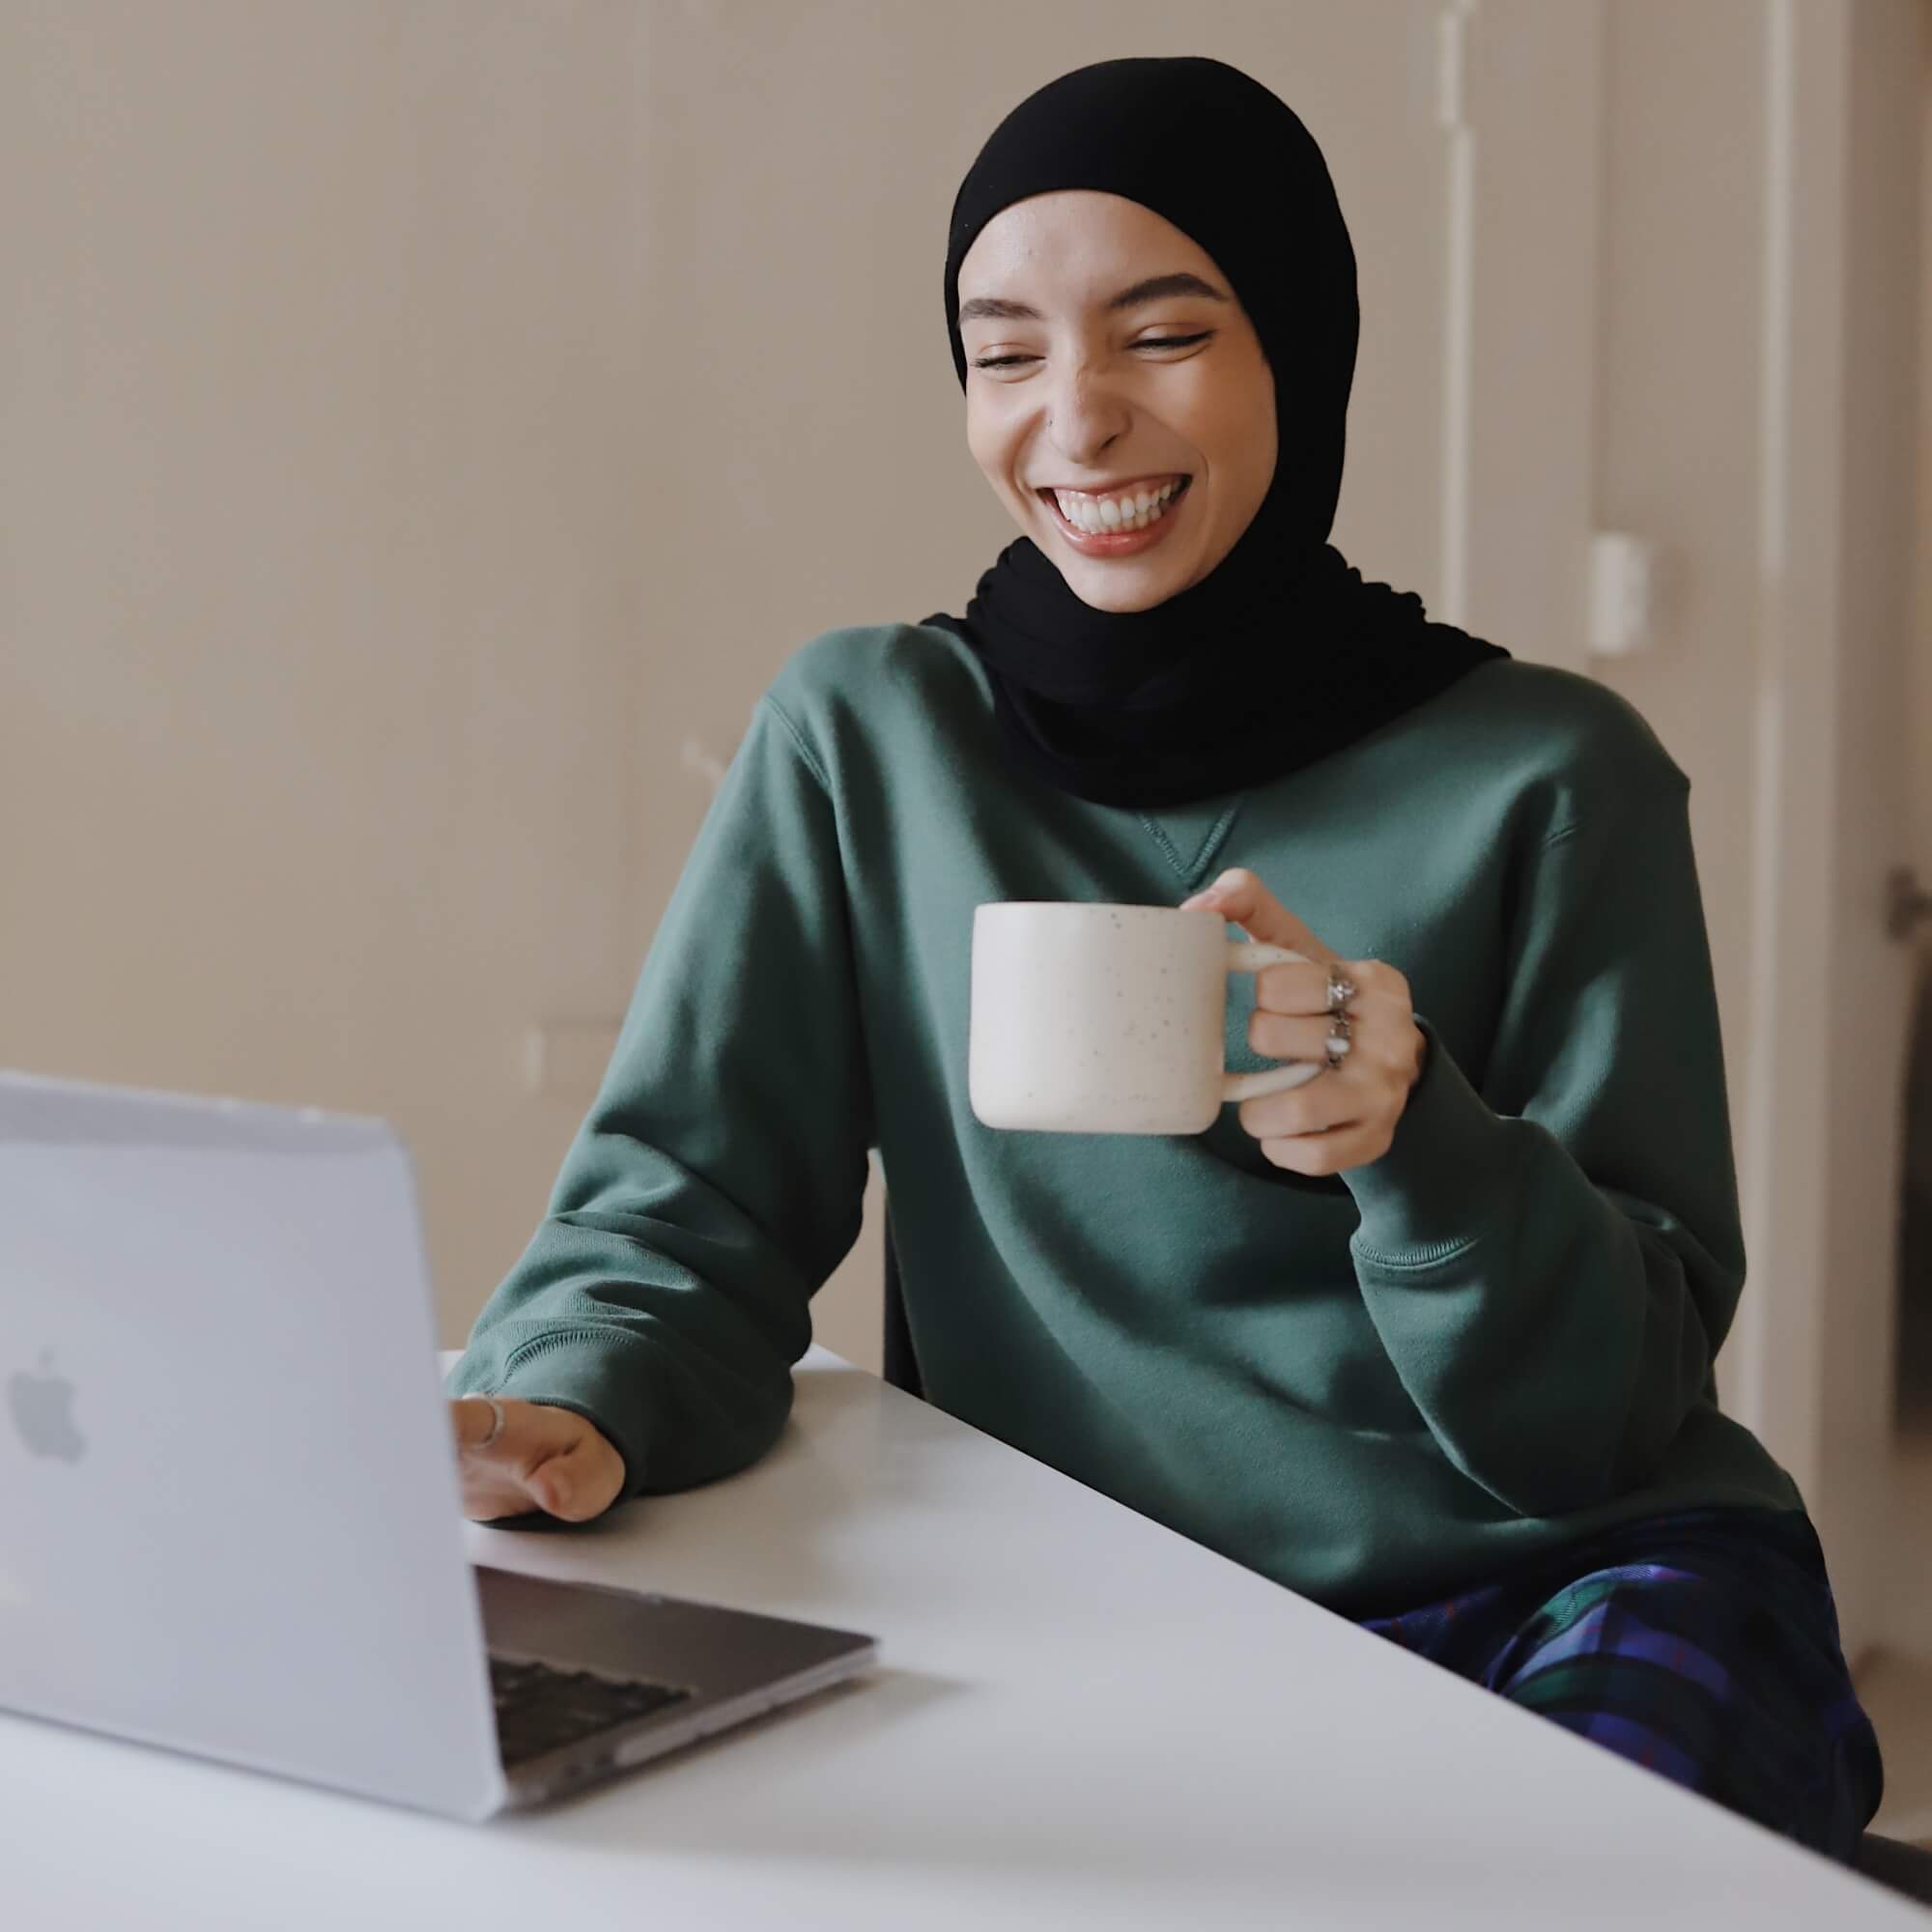 A NurseRecruit attendee smiling at a laptop during a Virtual Career Fair